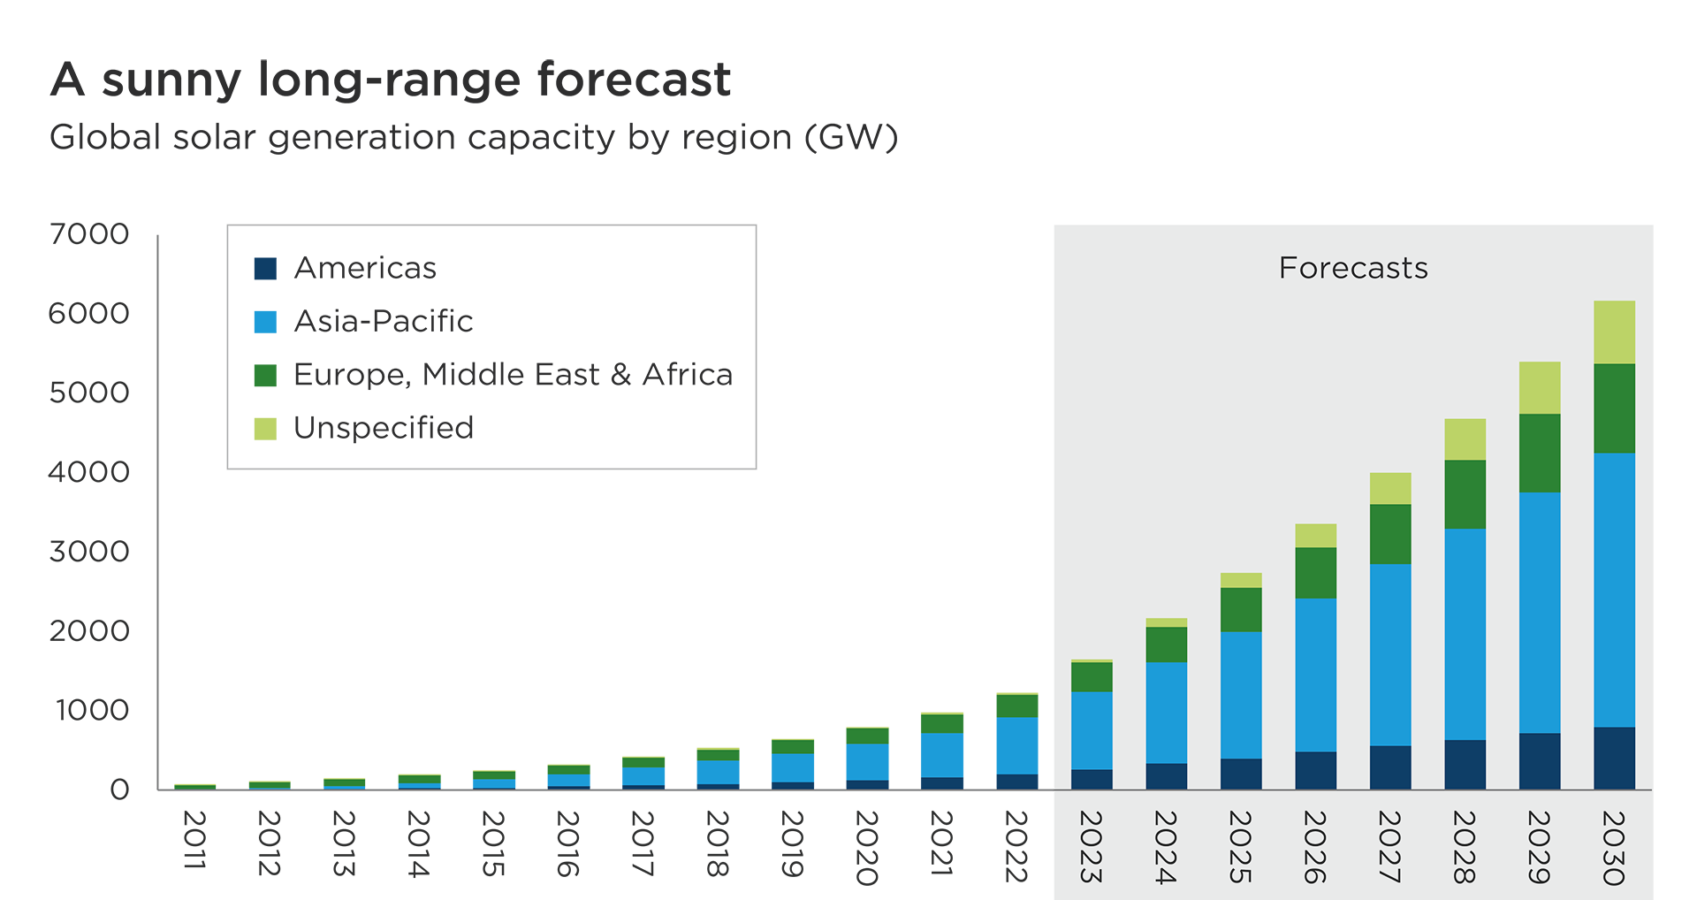 Bar chart showing global solar generation capacity by region